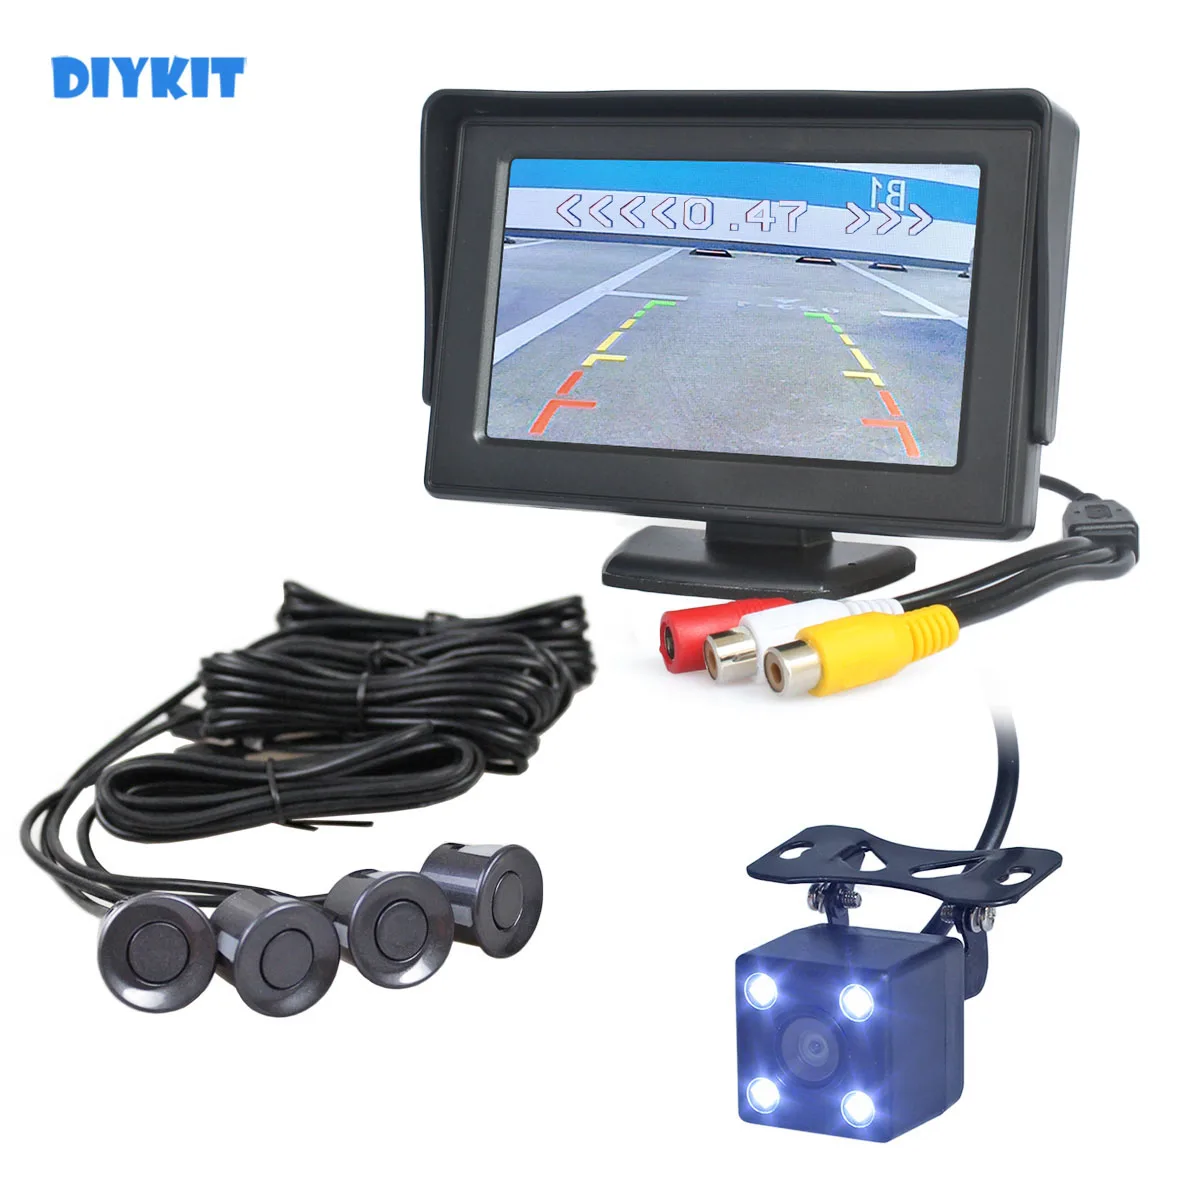 

DIYKIT Video Parking Radar 4.3" Backup Car Monitor + LED Rear View Car Camera + 4 x Sensors Video Parking Assistance Kit